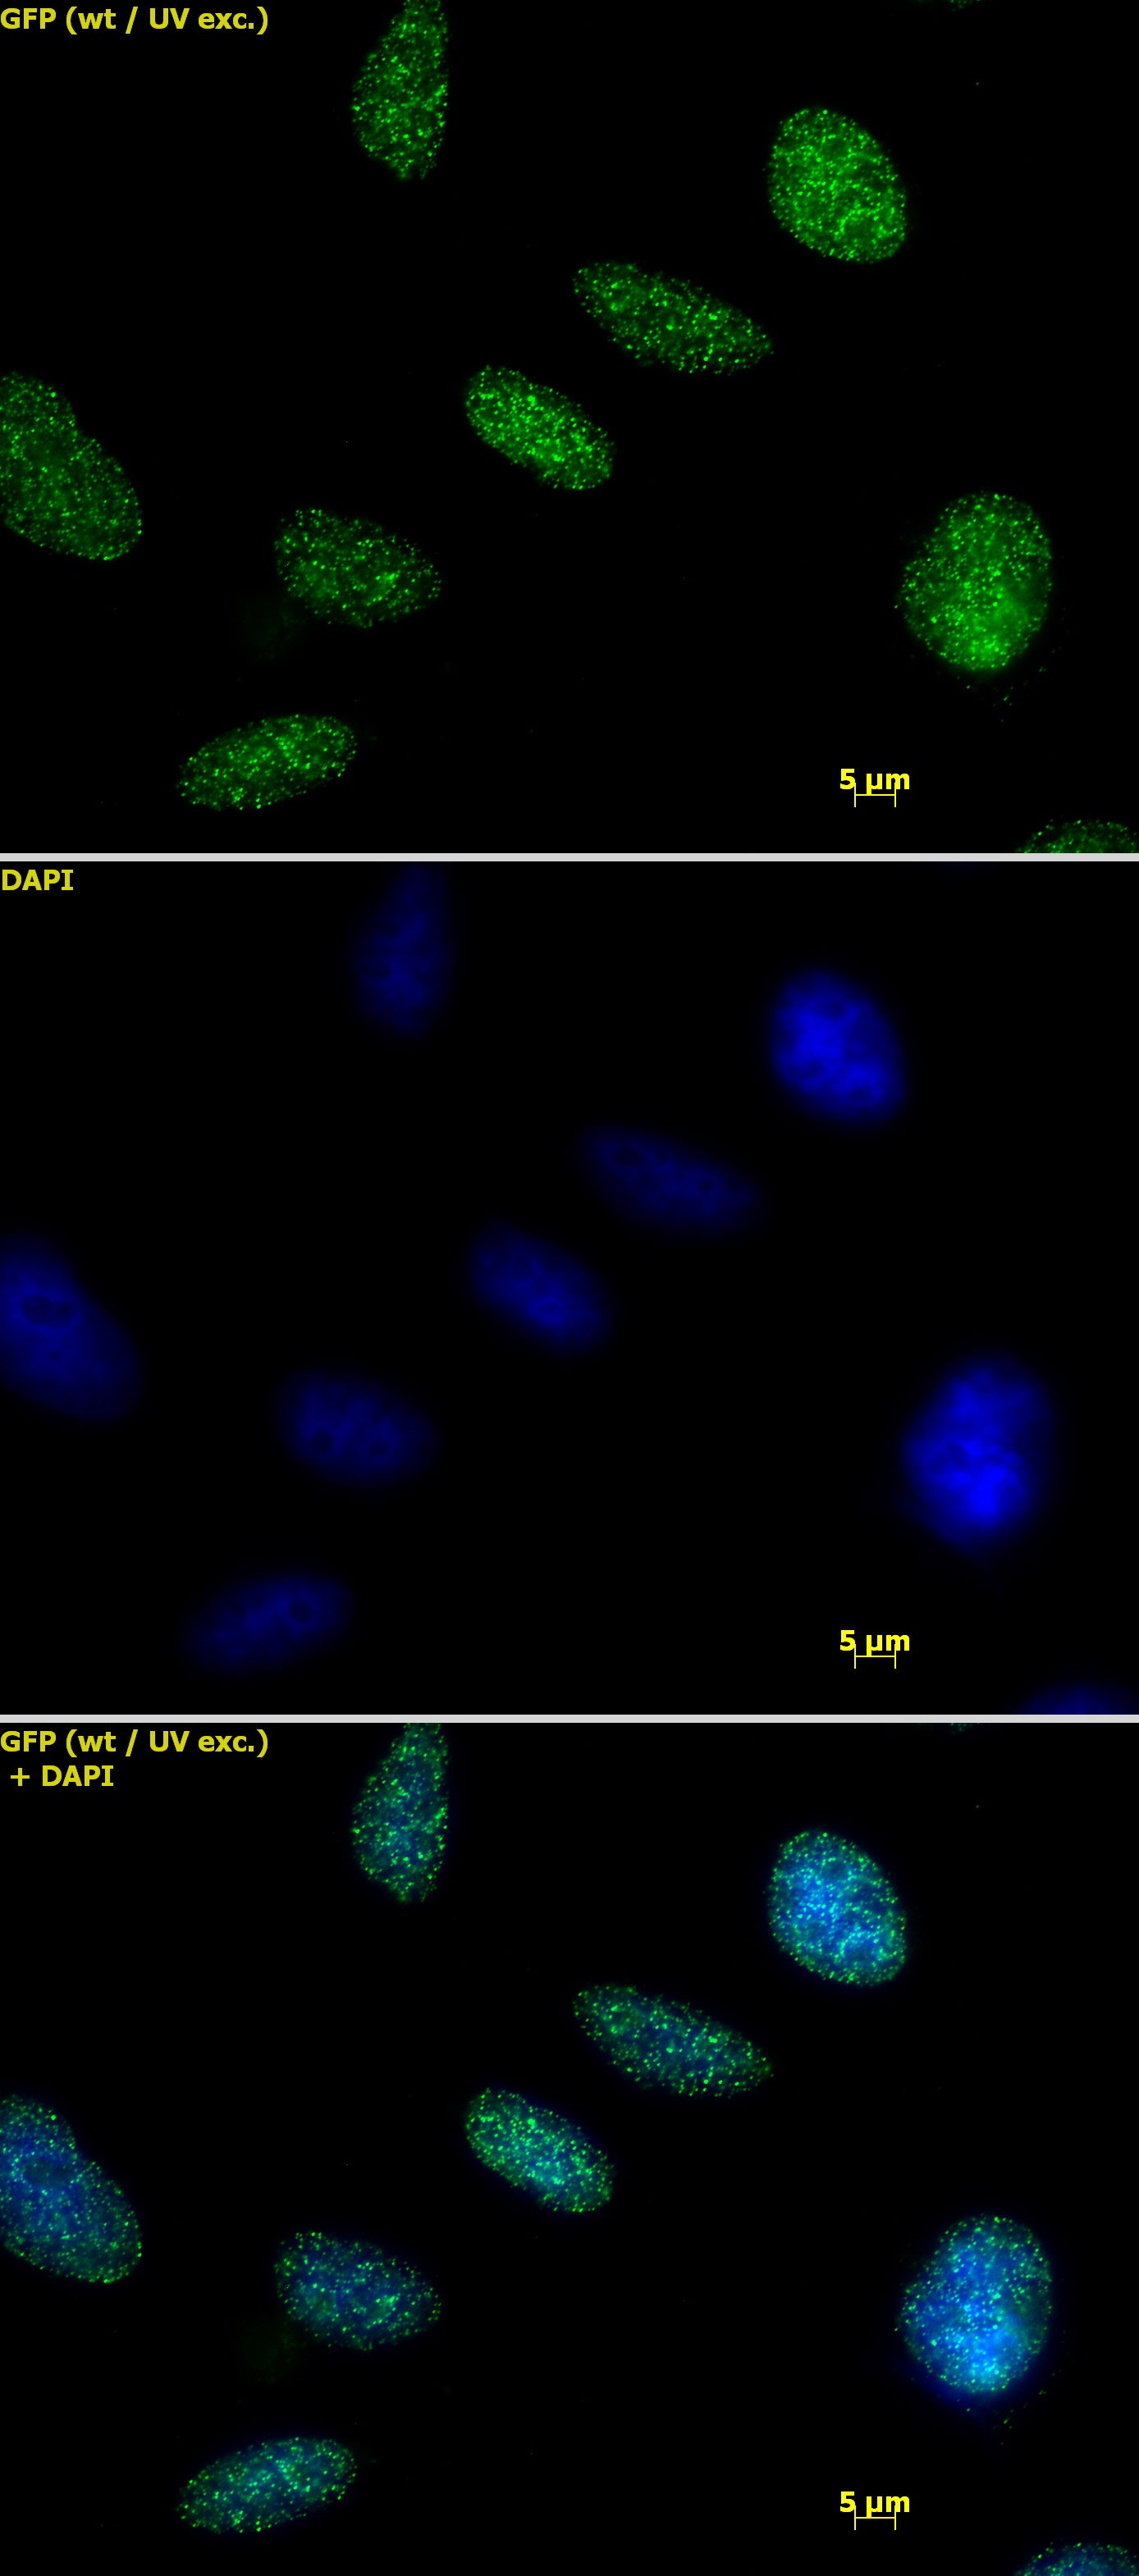 Histone H1 antibody (pAb) - MyBio Ireland - Active Motif